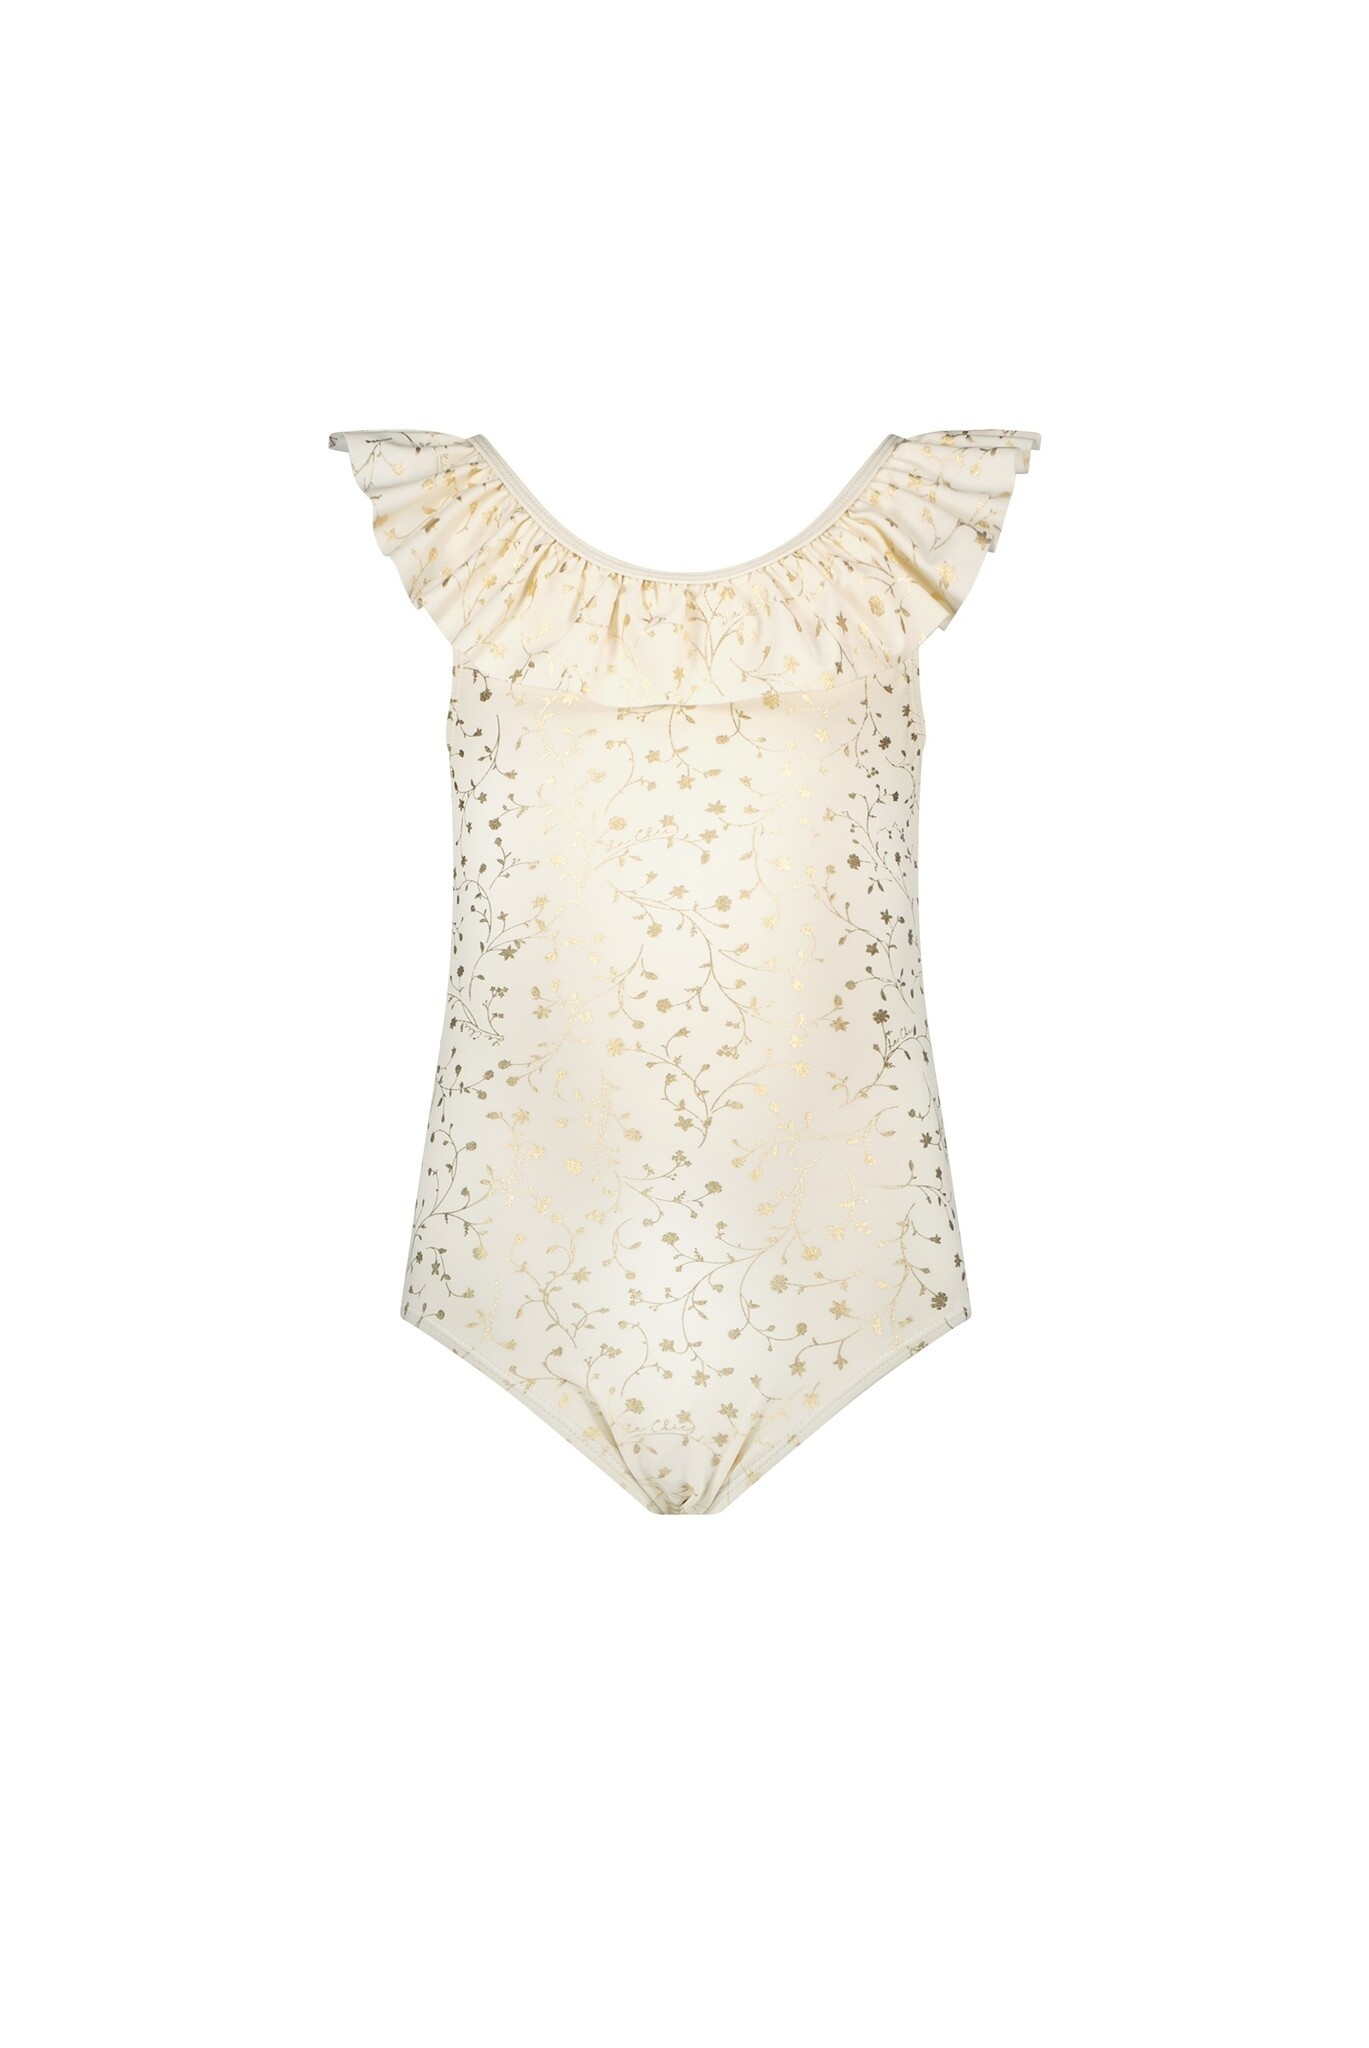 Le Chic C401-5051 Meisjes Jumpsuit - Pearled Ivory - Maat 152